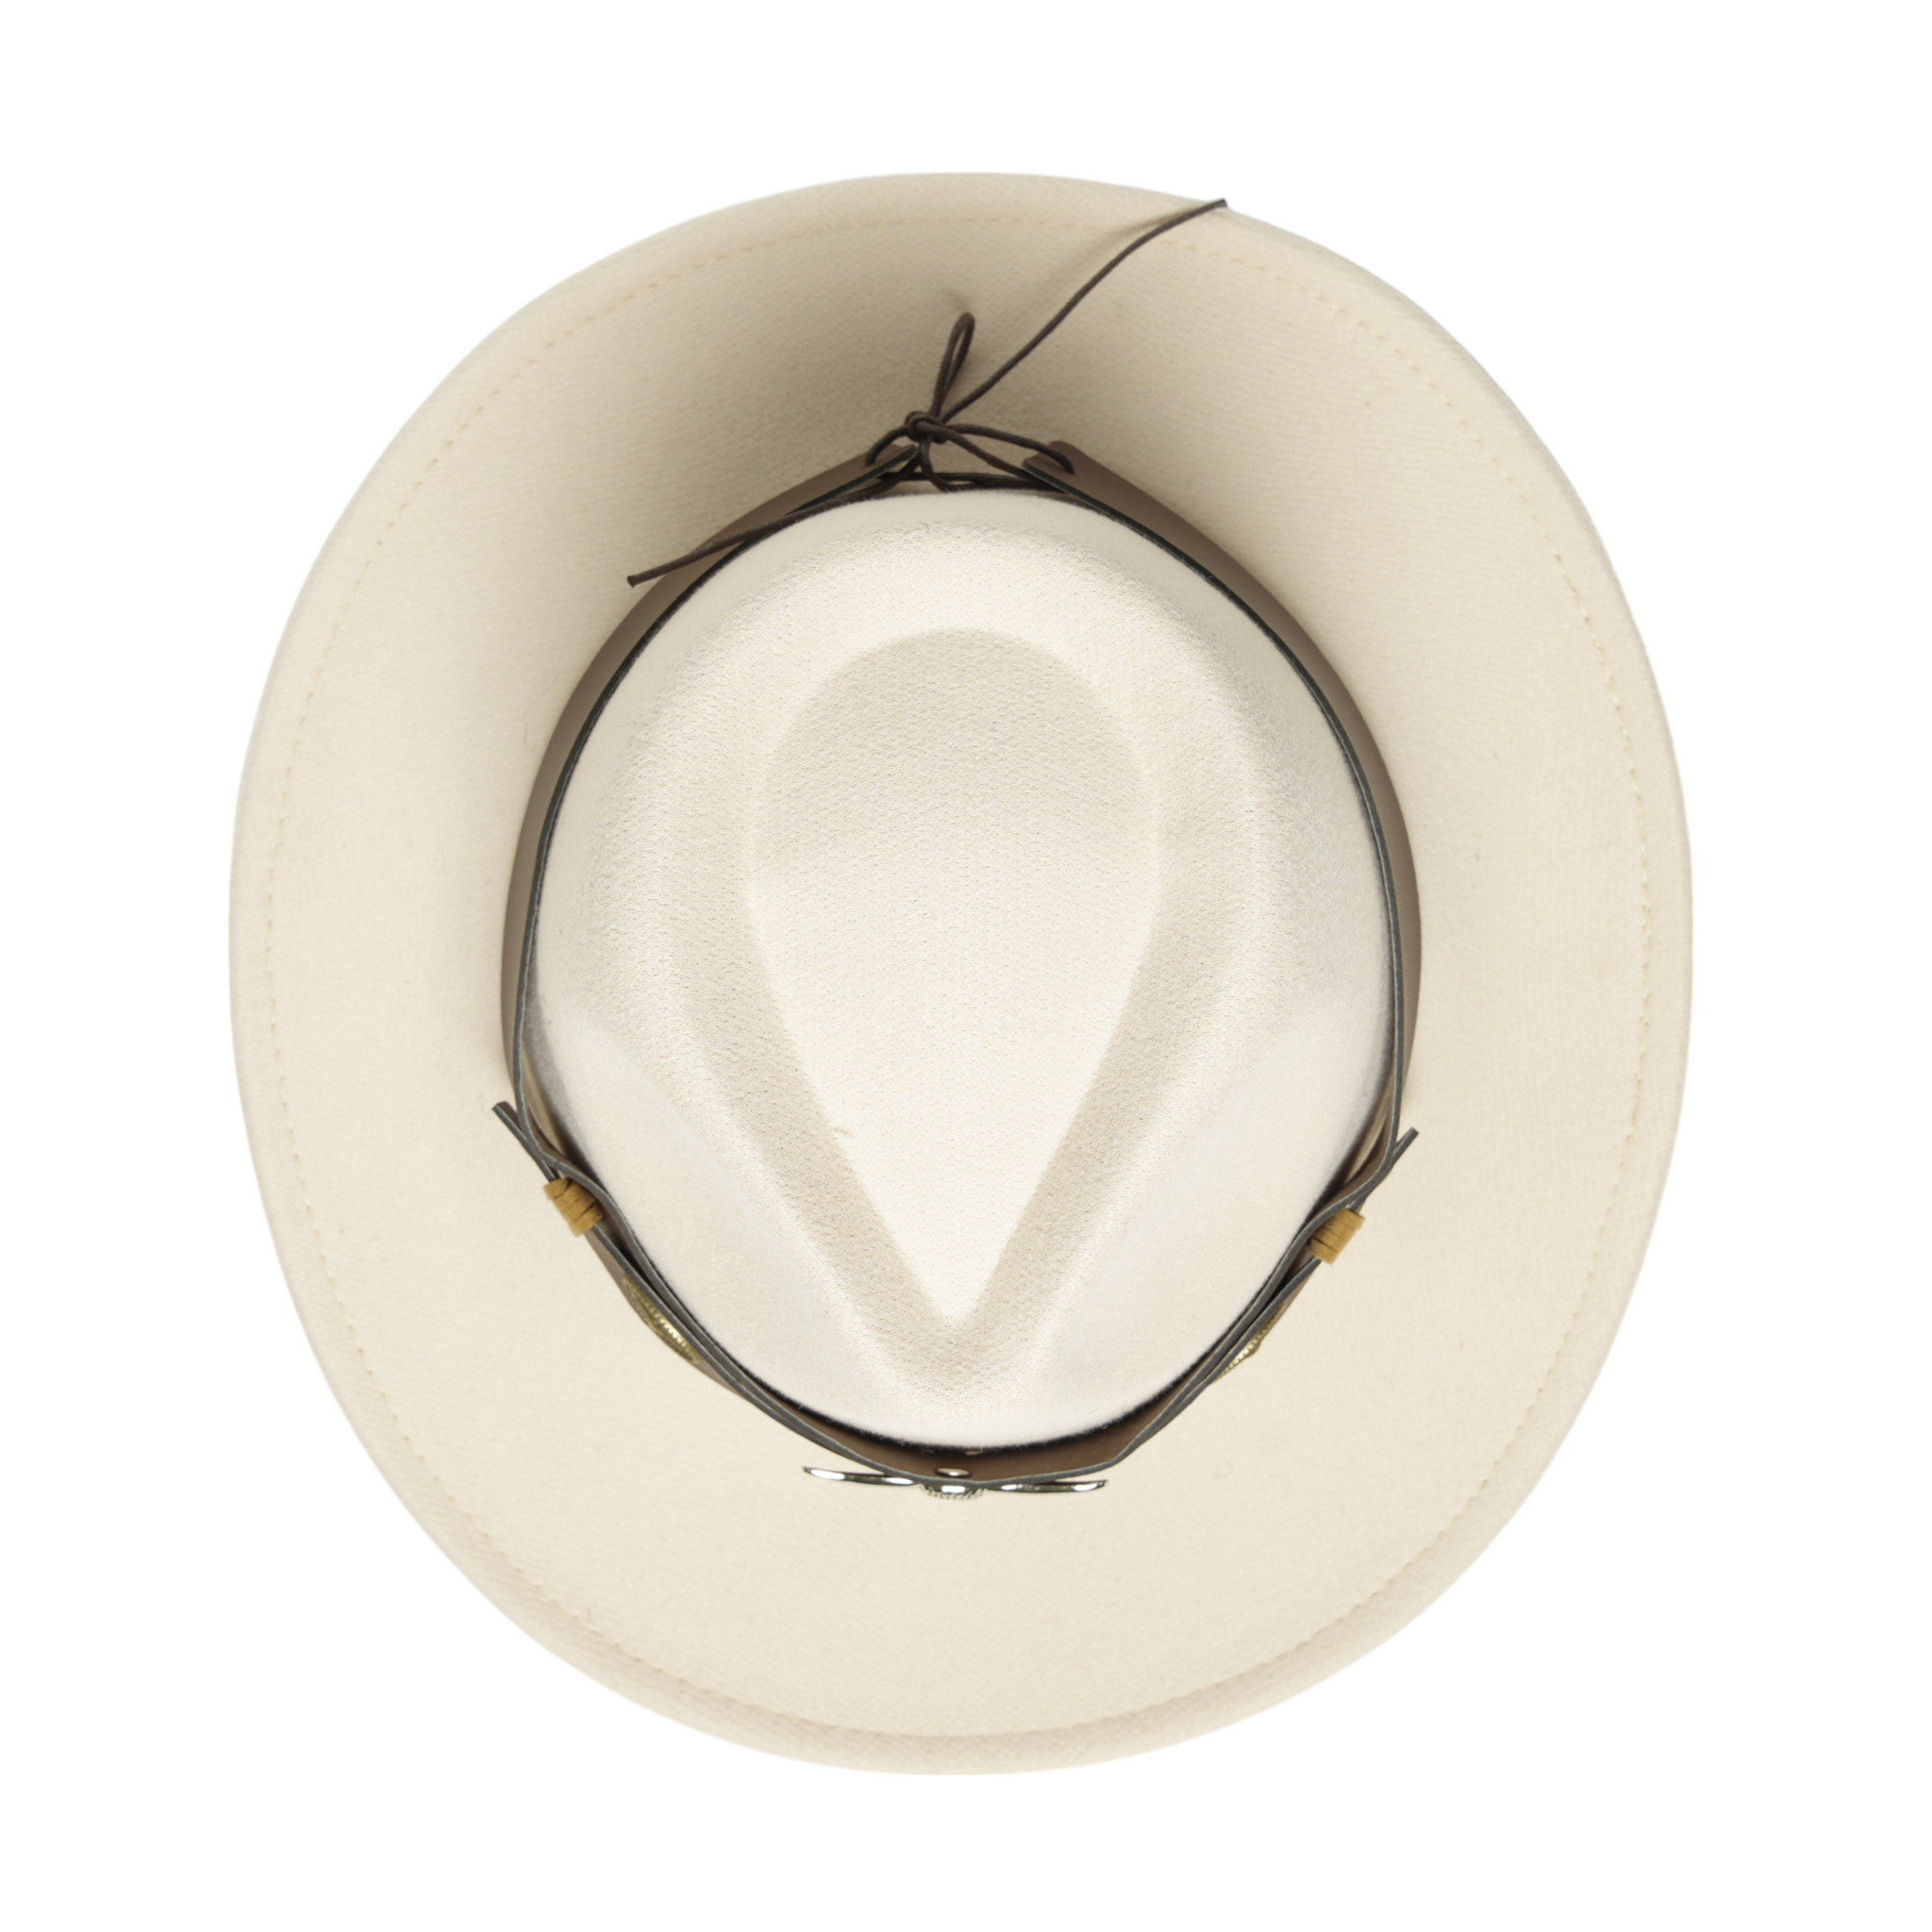 Chokore cowboy hat with Ox head belt  (Off White)